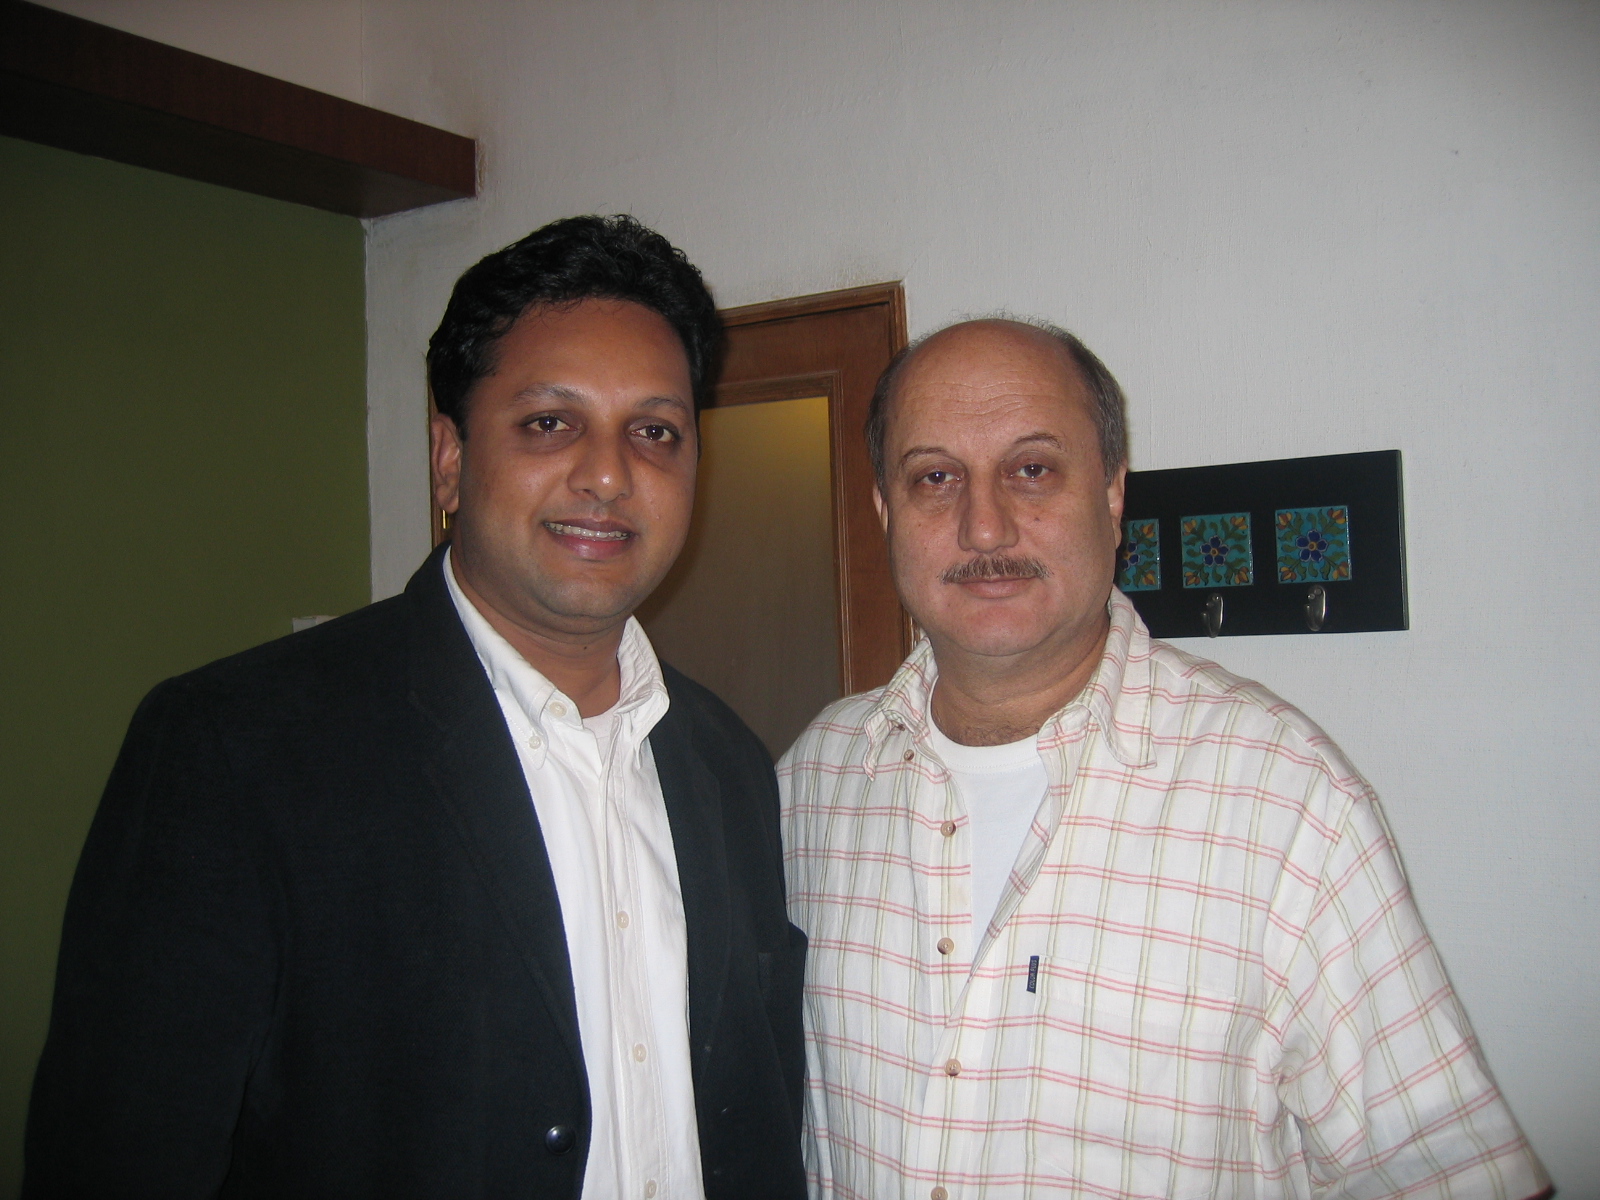 With actor Anupam Kher